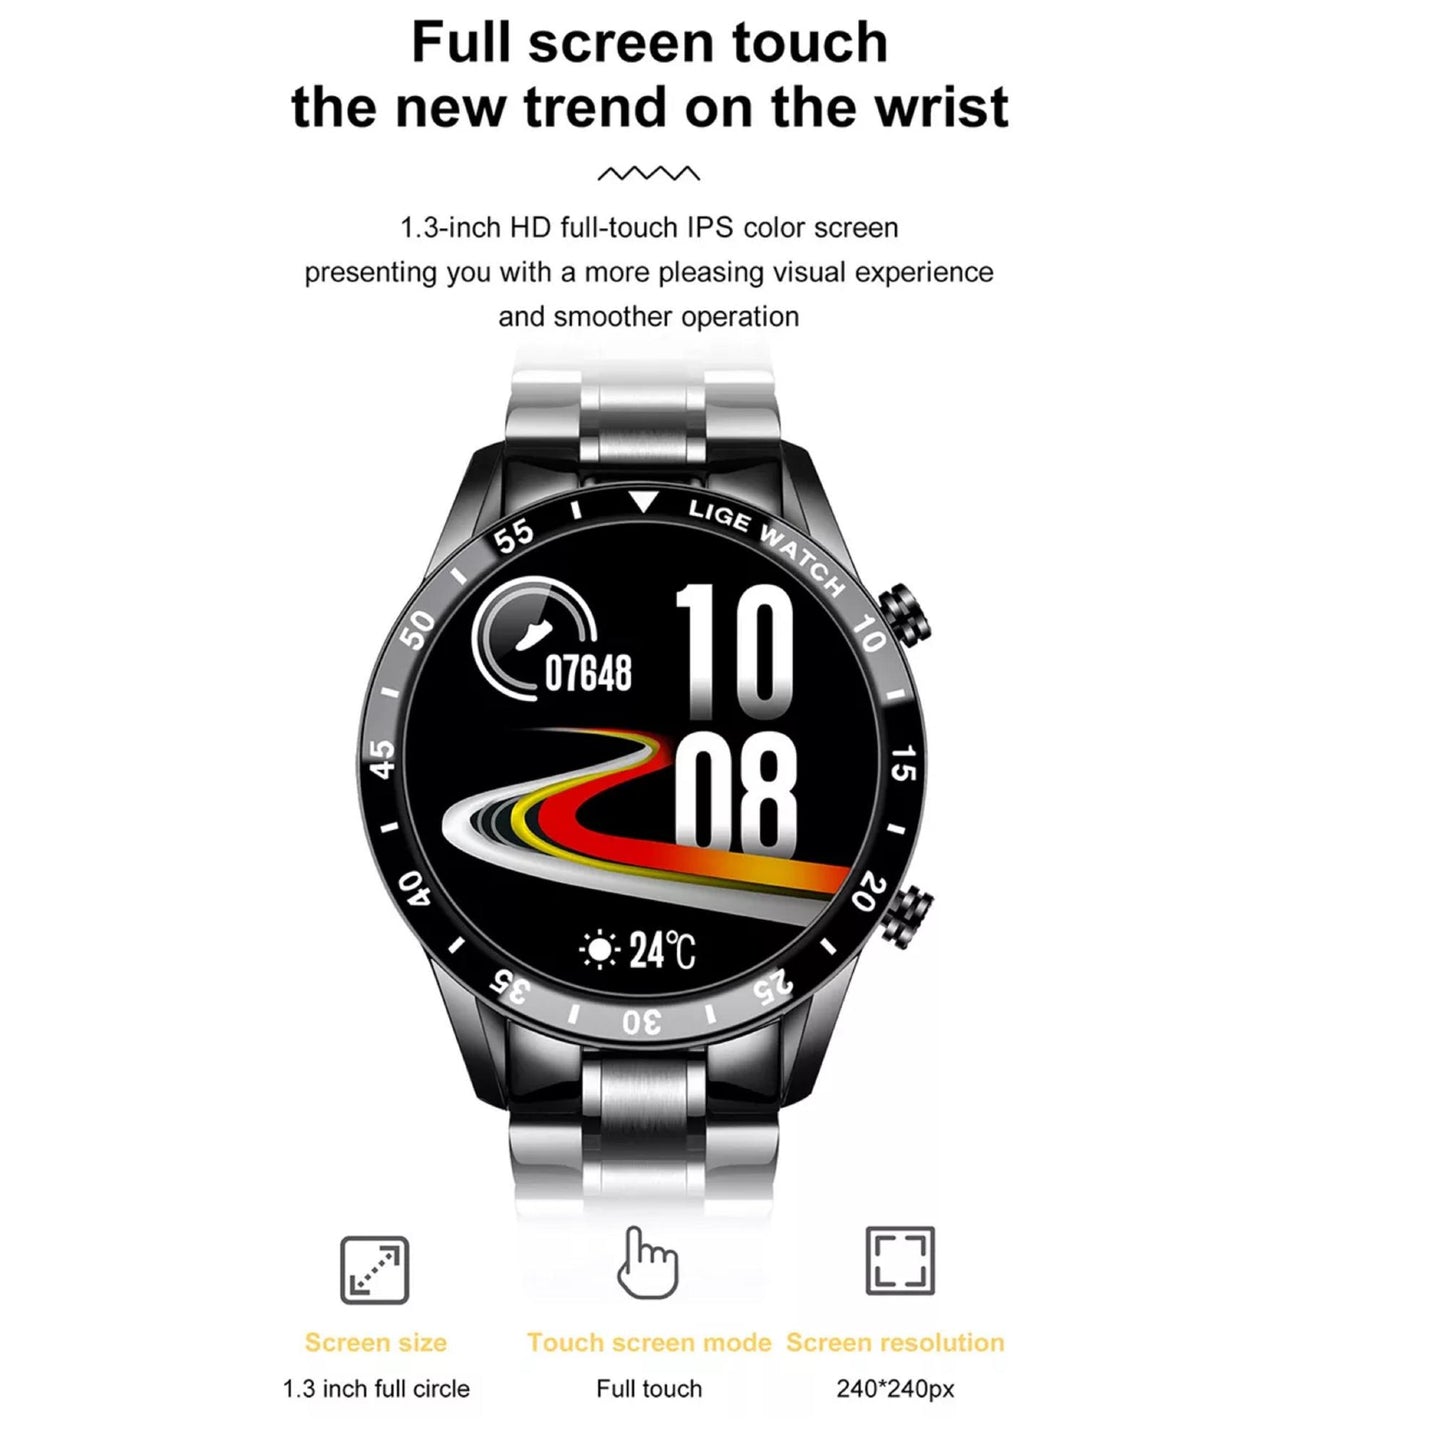 Lige BW0189 Smartwatch: Lebendige Visuals auf dem 1,3-Zoll-HD-IPS-Bildschirm. | Blue Chilli Electronics.